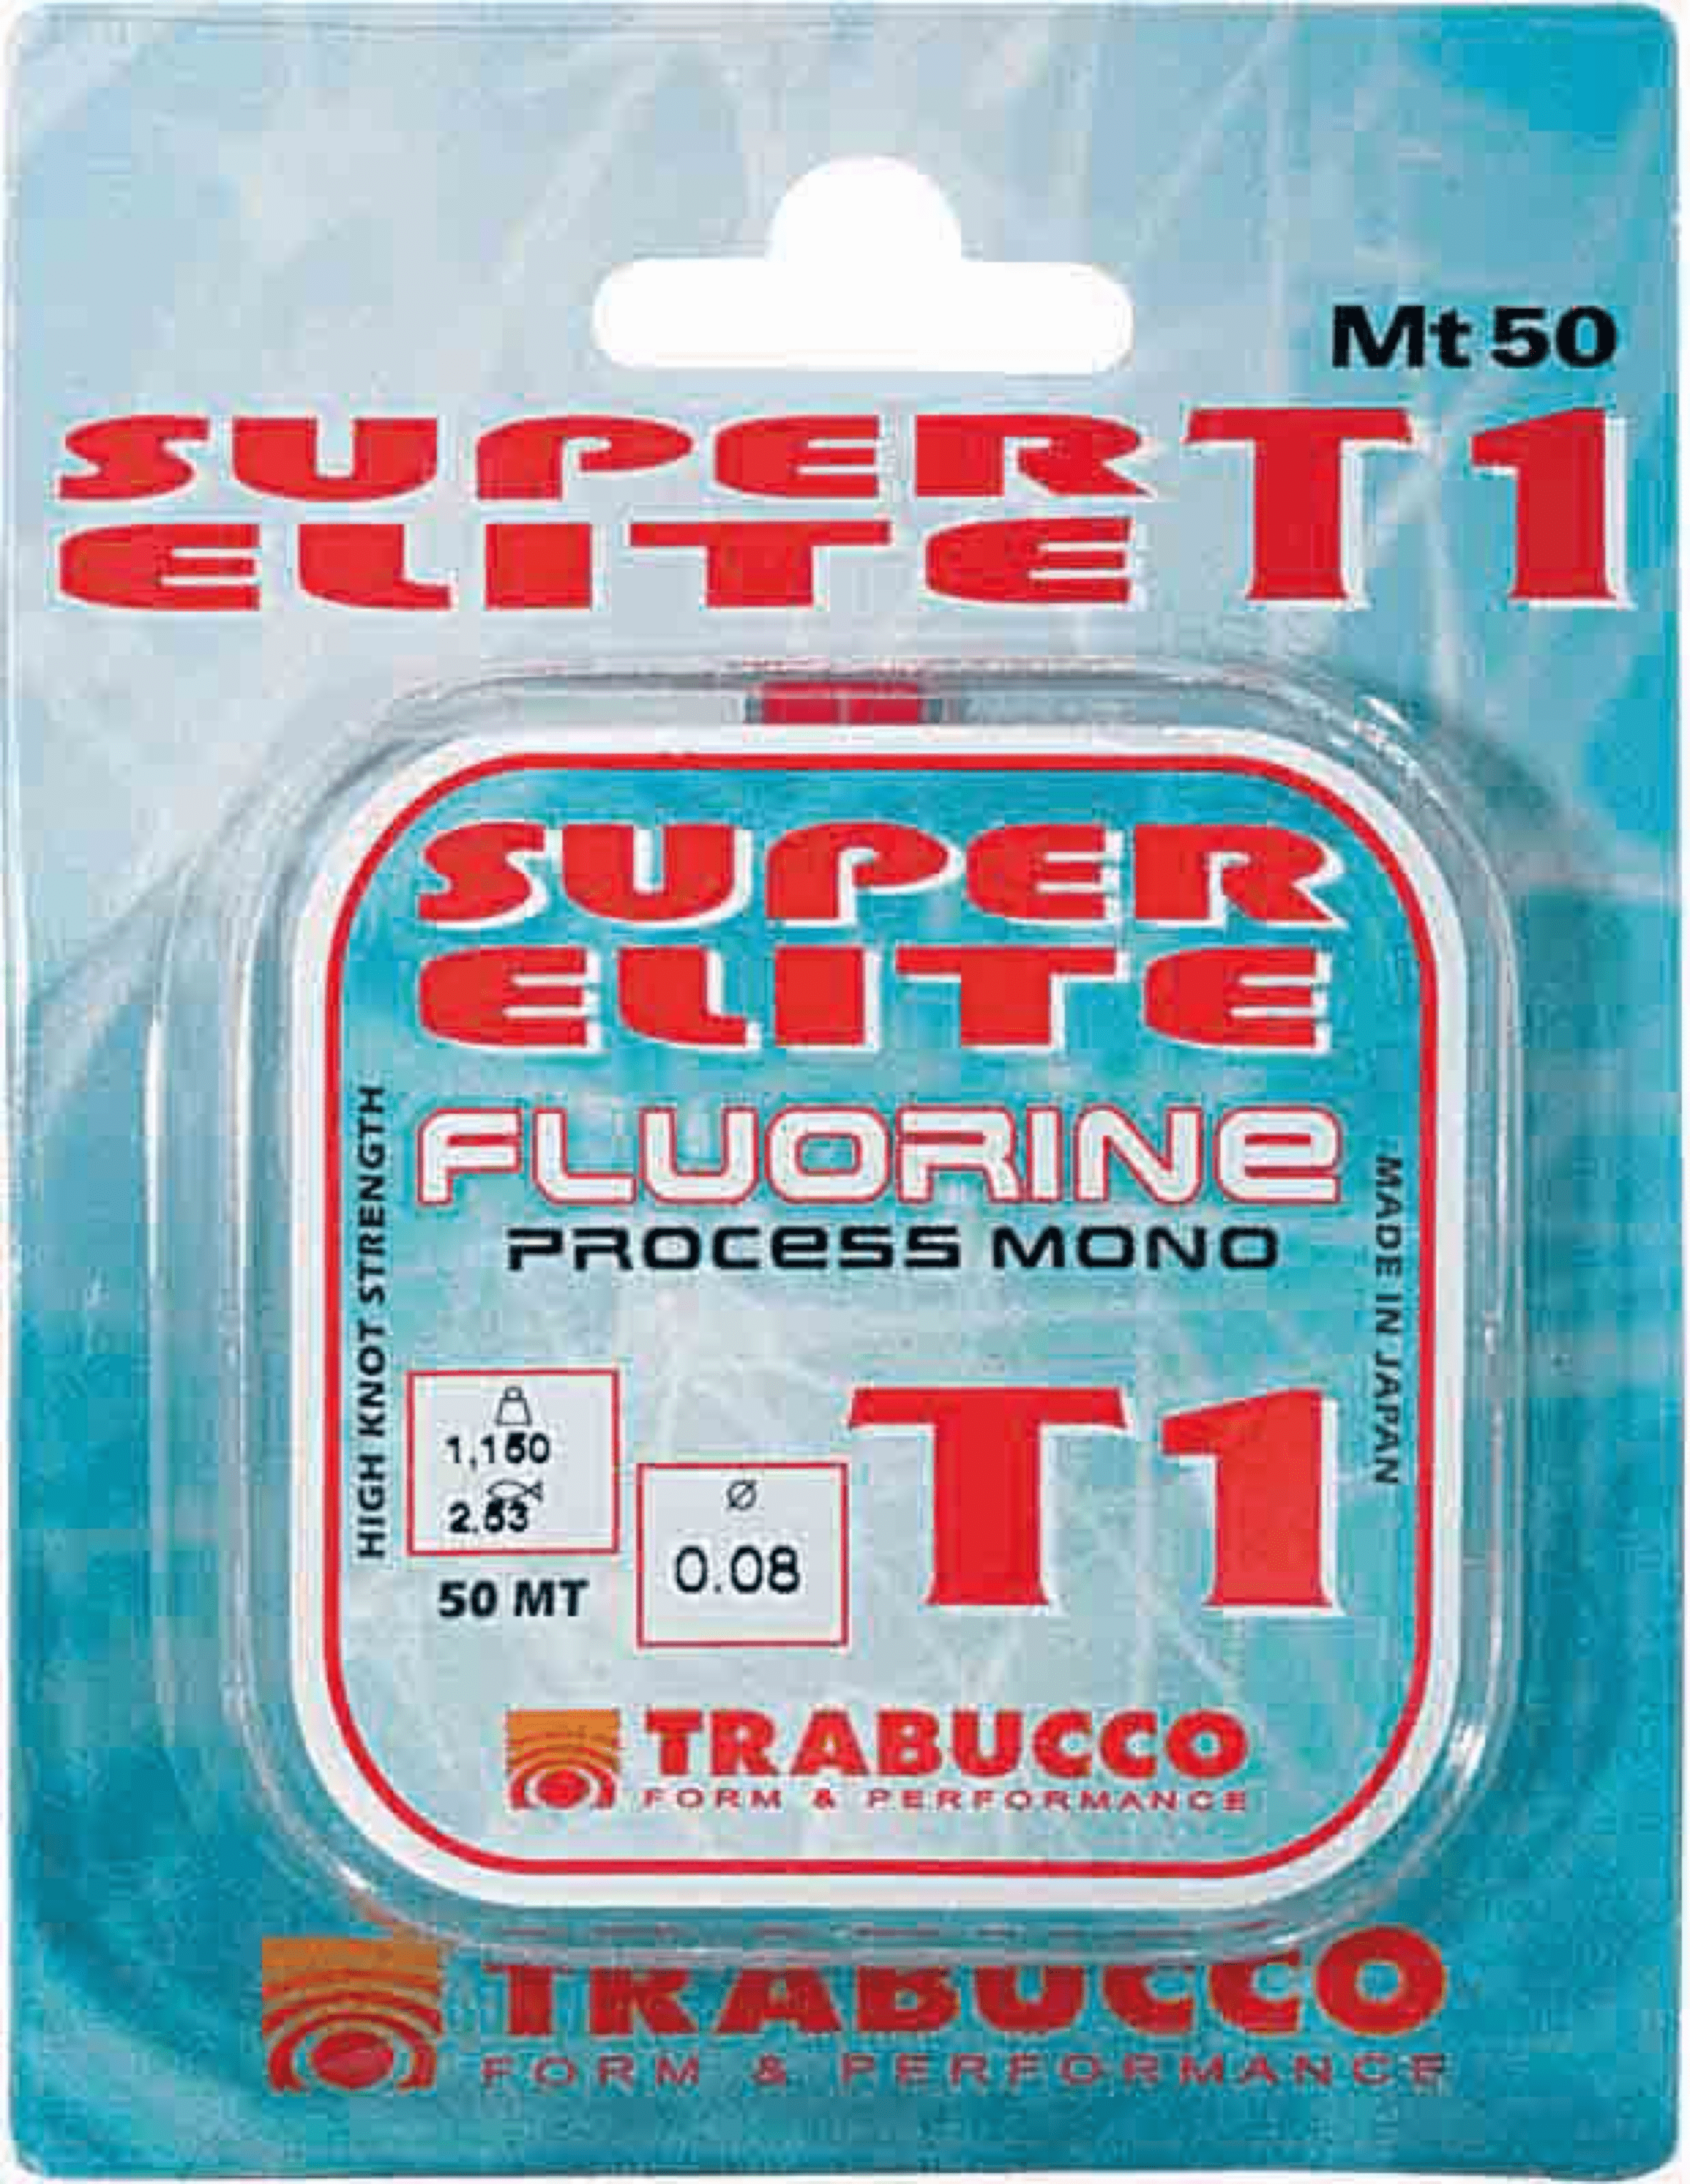 trabucco T1 super elite fluorine